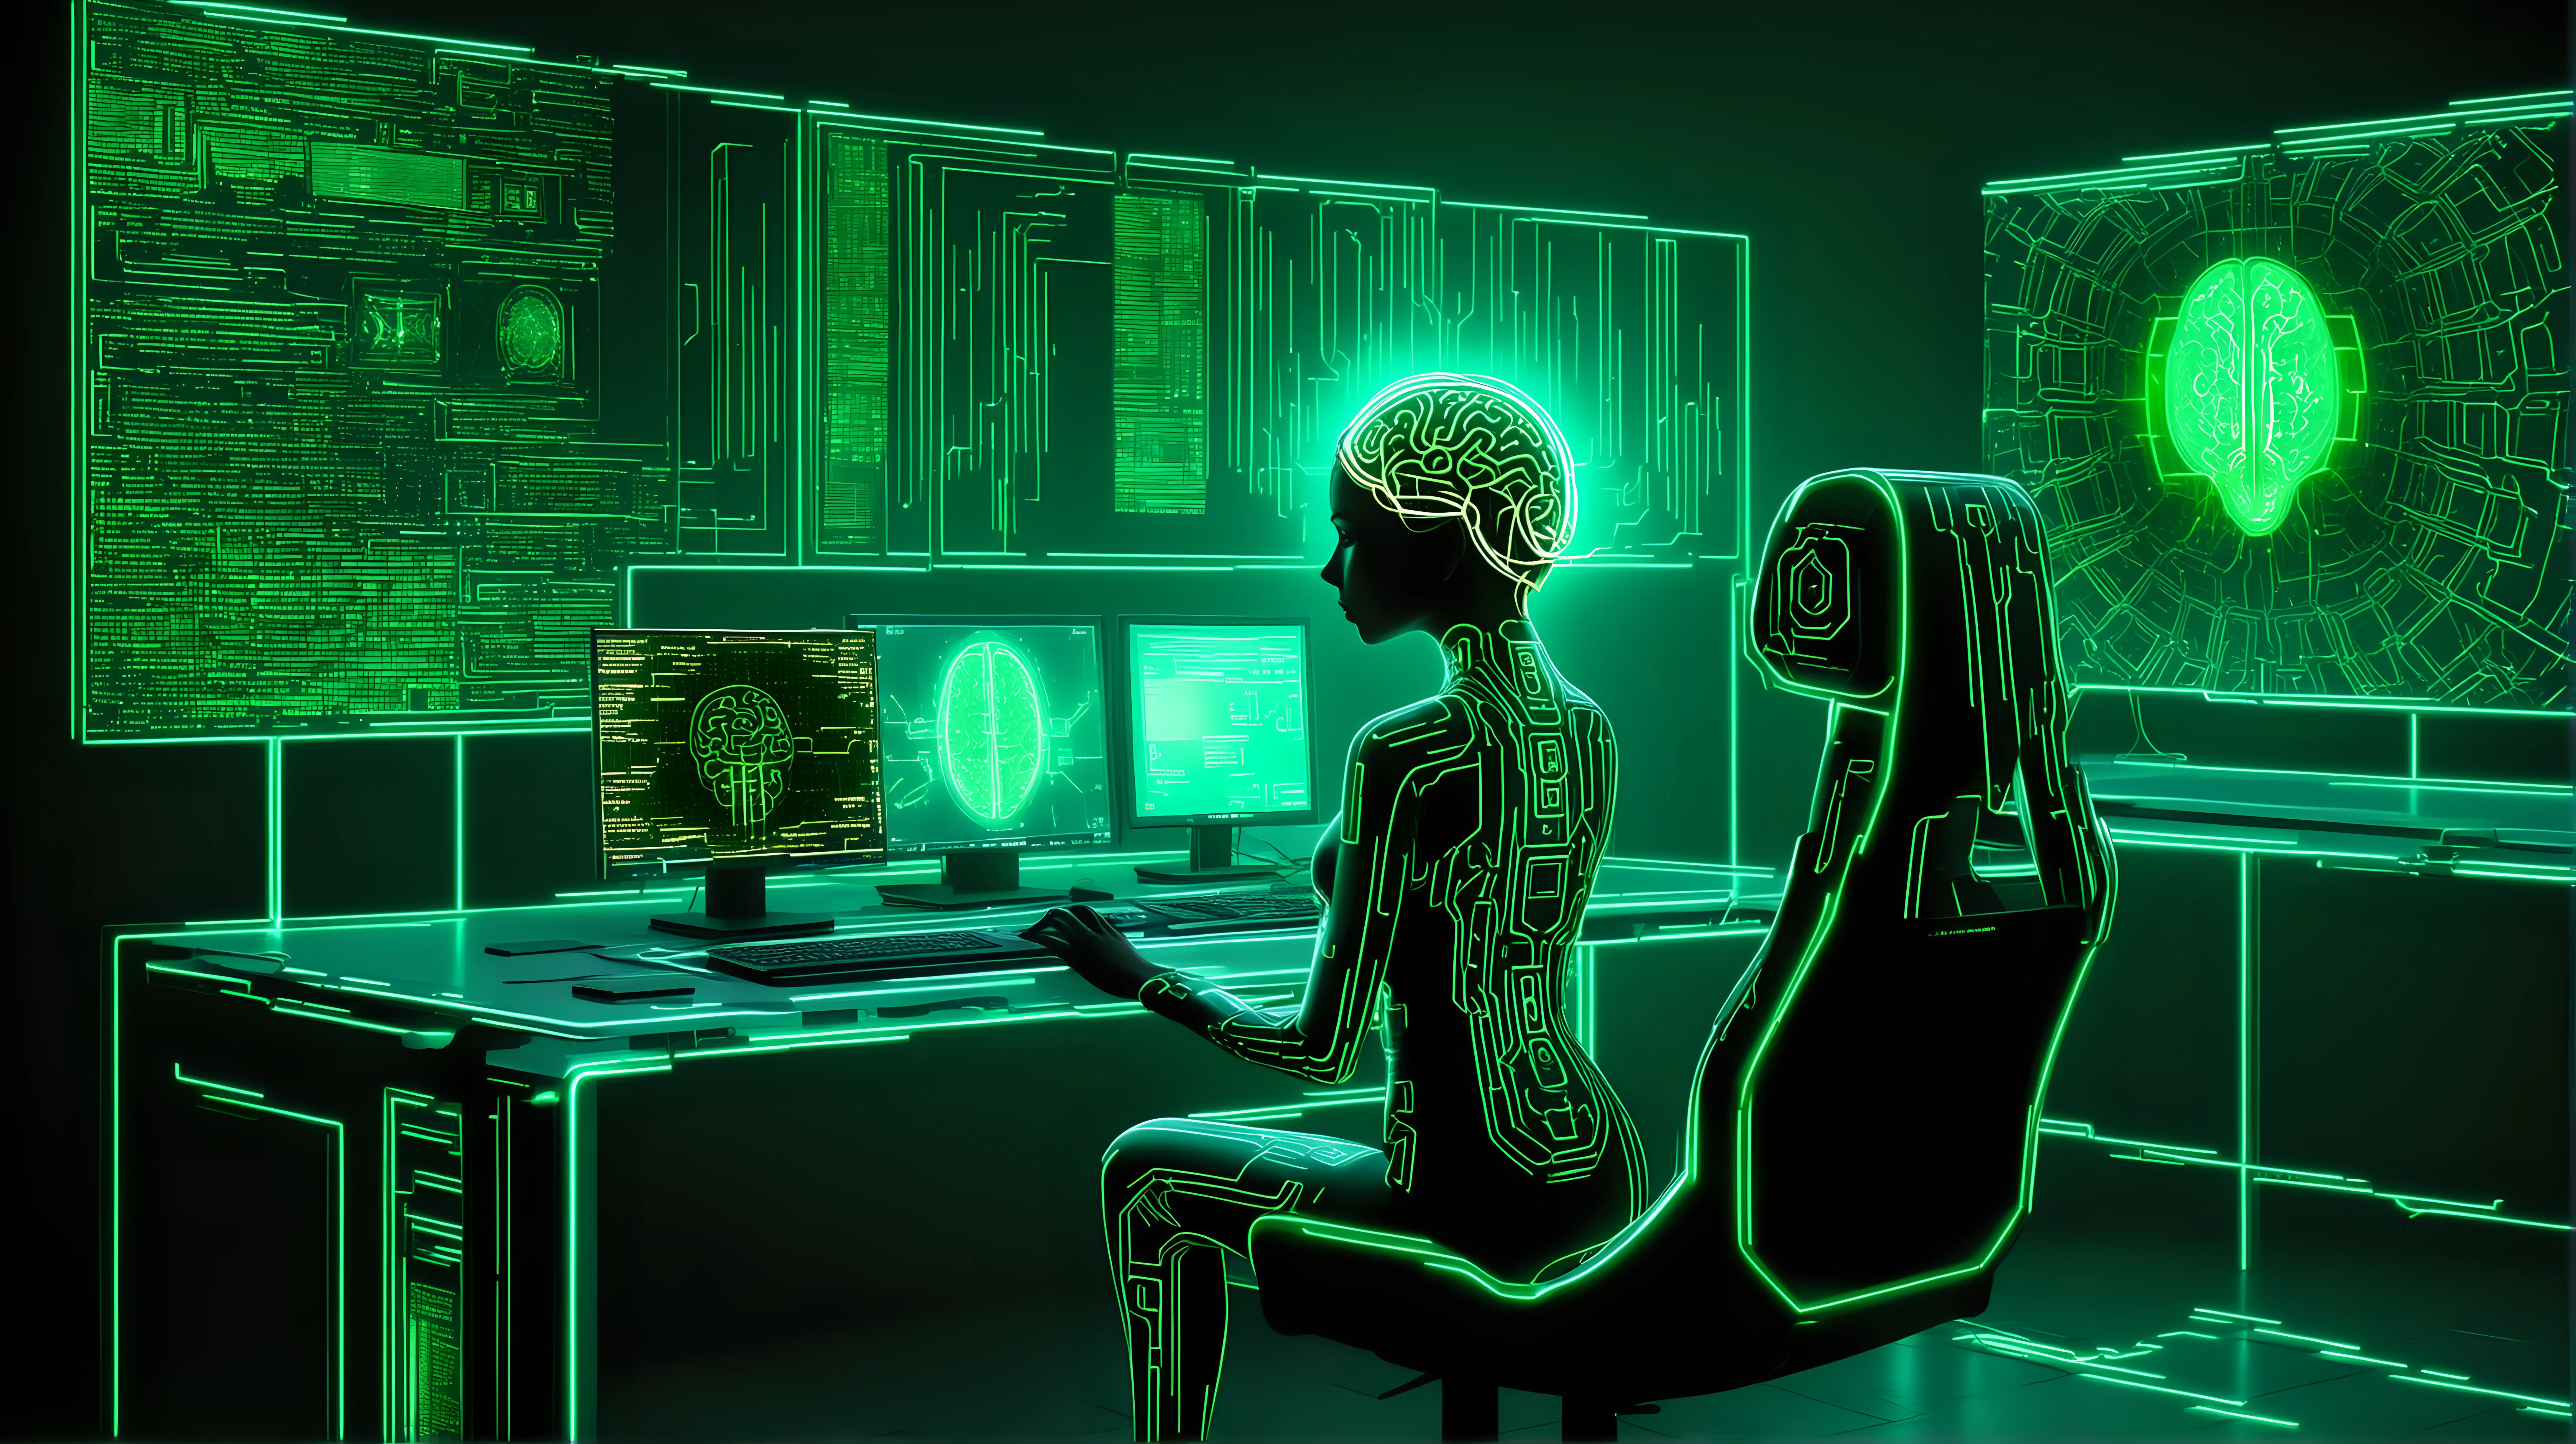 Futuristic BrainComputer Interface Device with Elegant Woman Hacker in Neon Cyberpunk Lab